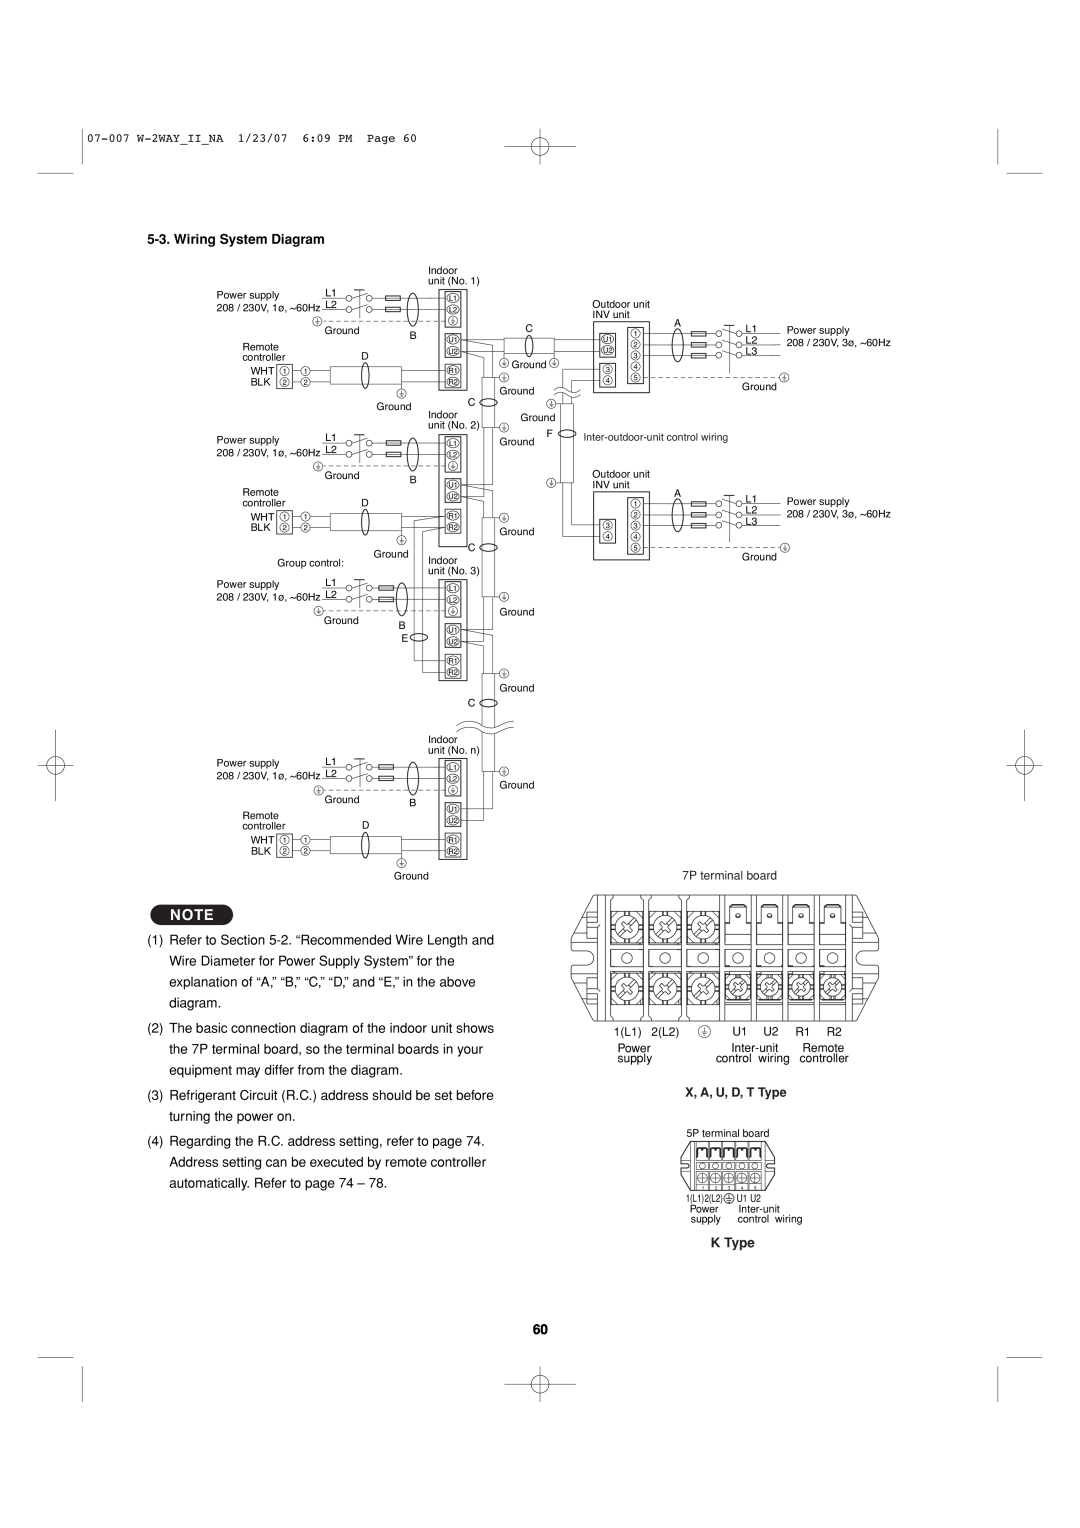 Sanyo 85464359982001 installation instructions Wiring System Diagram, K Type 